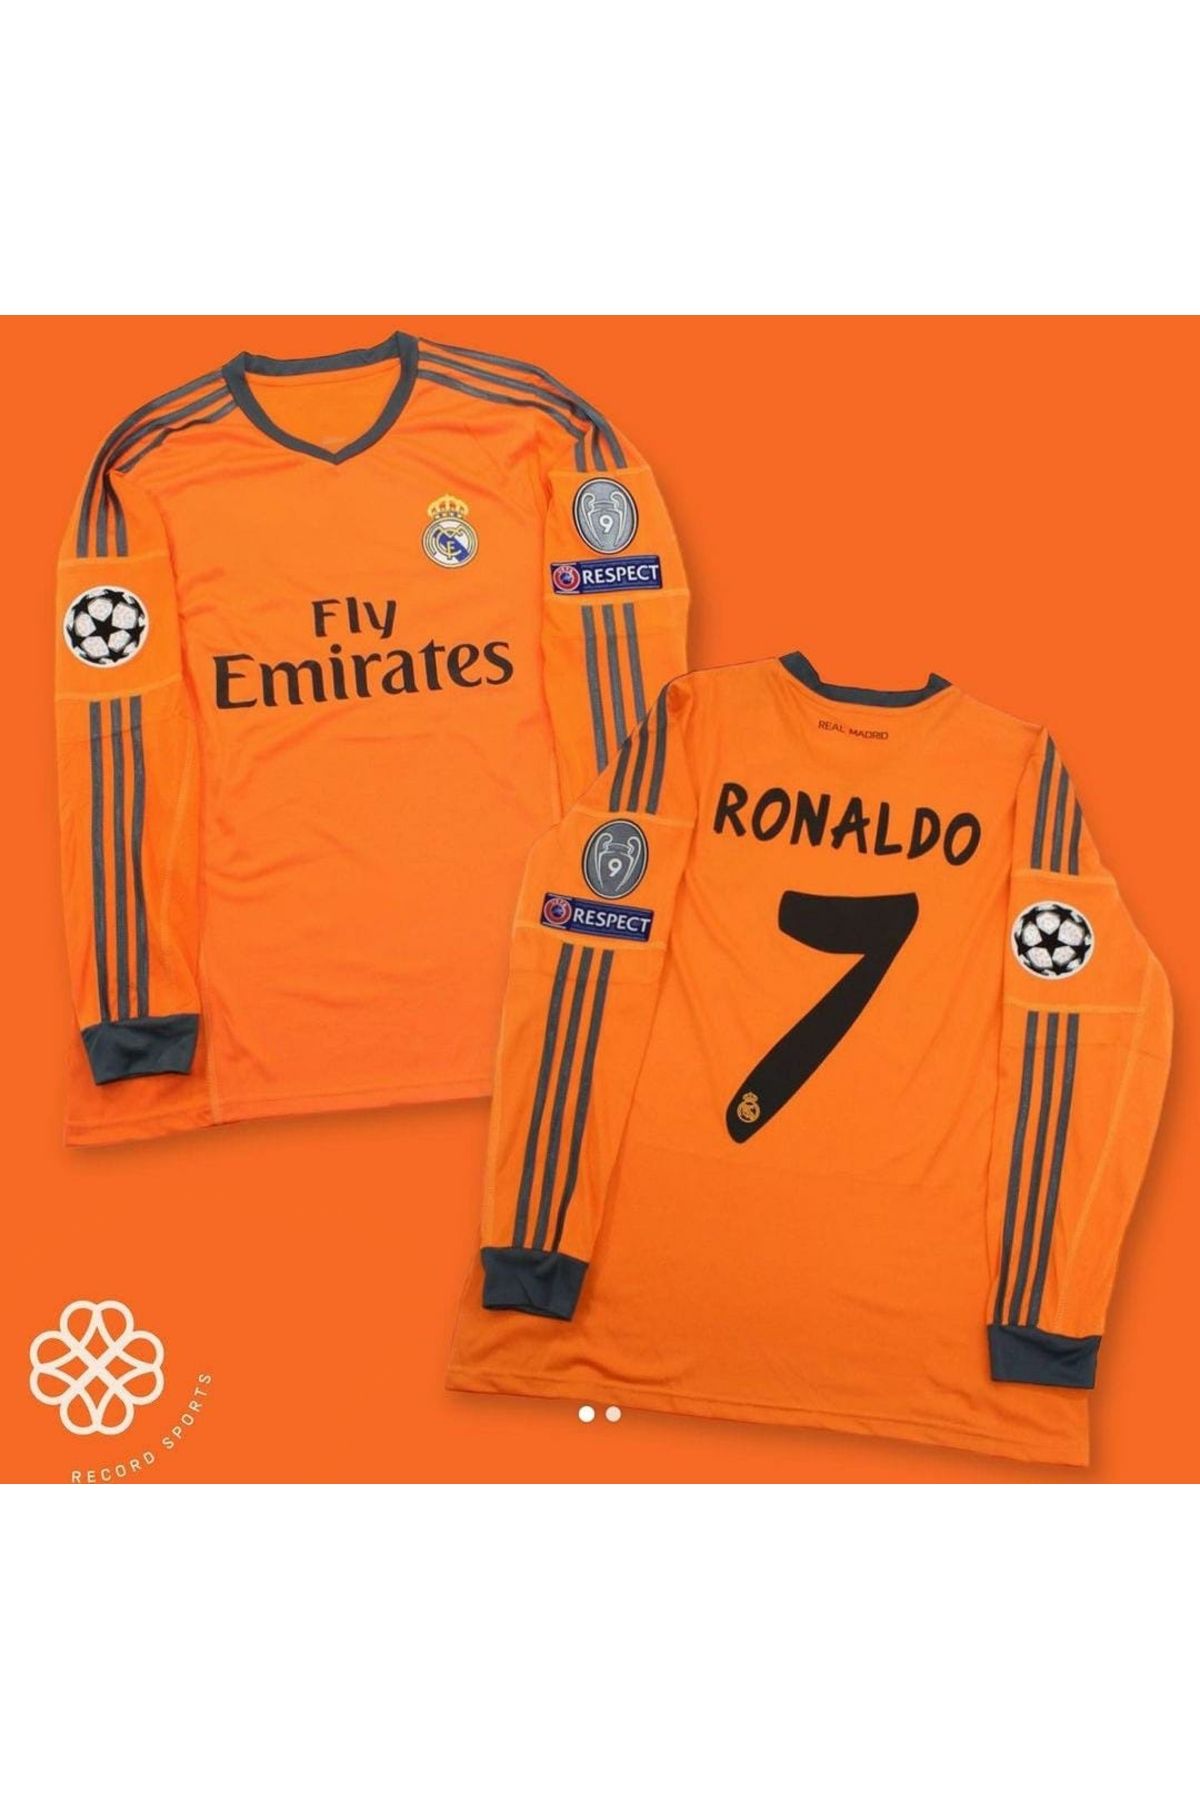 AJAX STAR Real Madrid Cristiano Ronaldo Efsane Nostalji Forması (UZUN KOL)